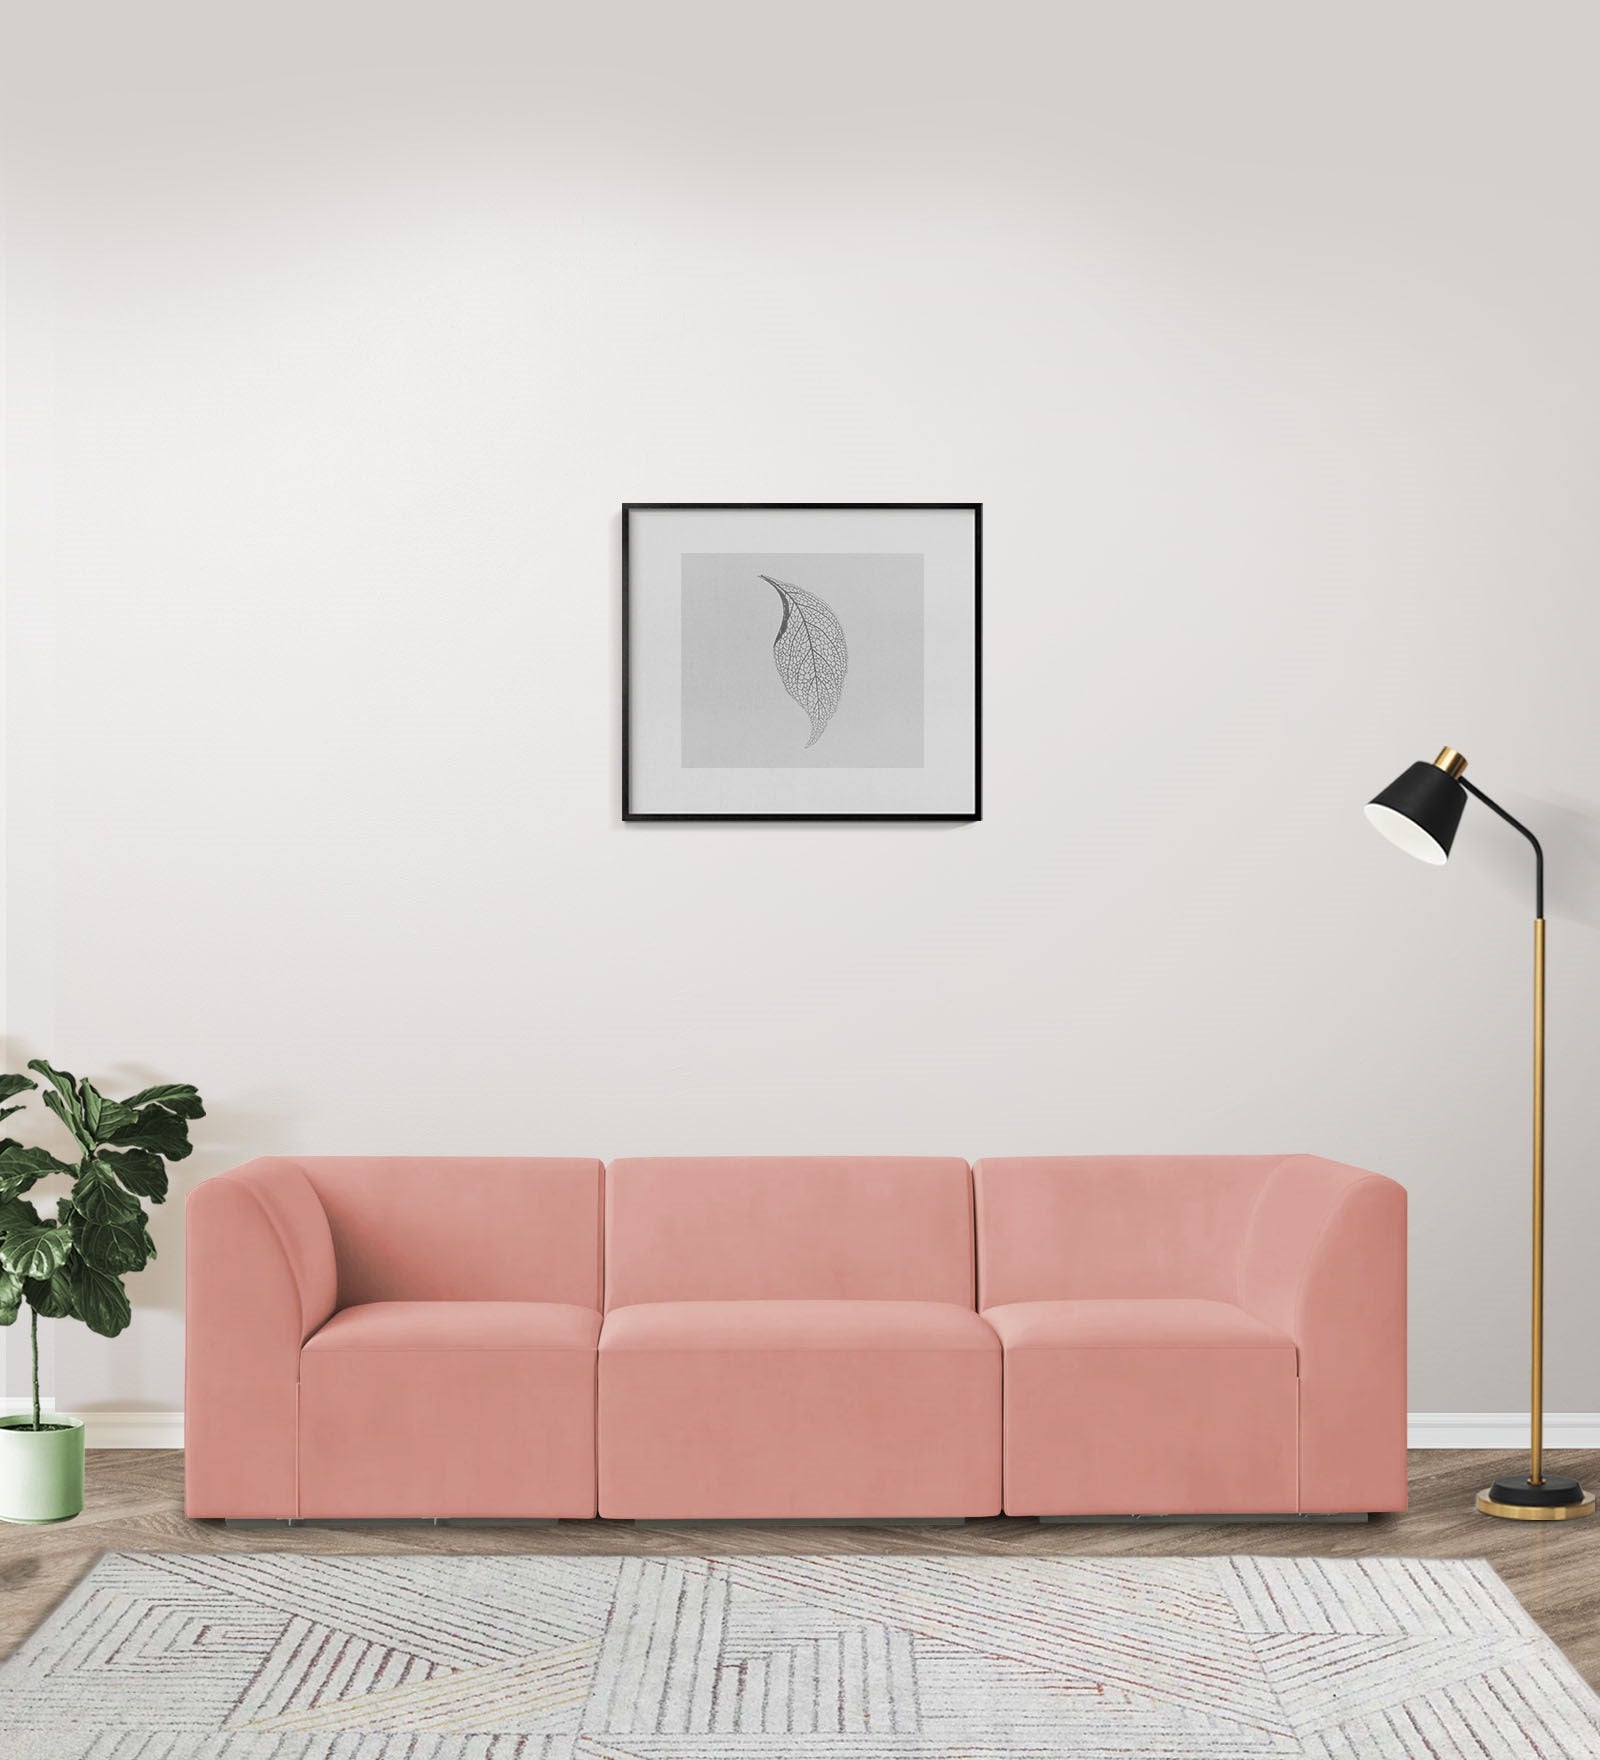 Bufa Velvet 3 Seater Sofa in Blush Pink Colour